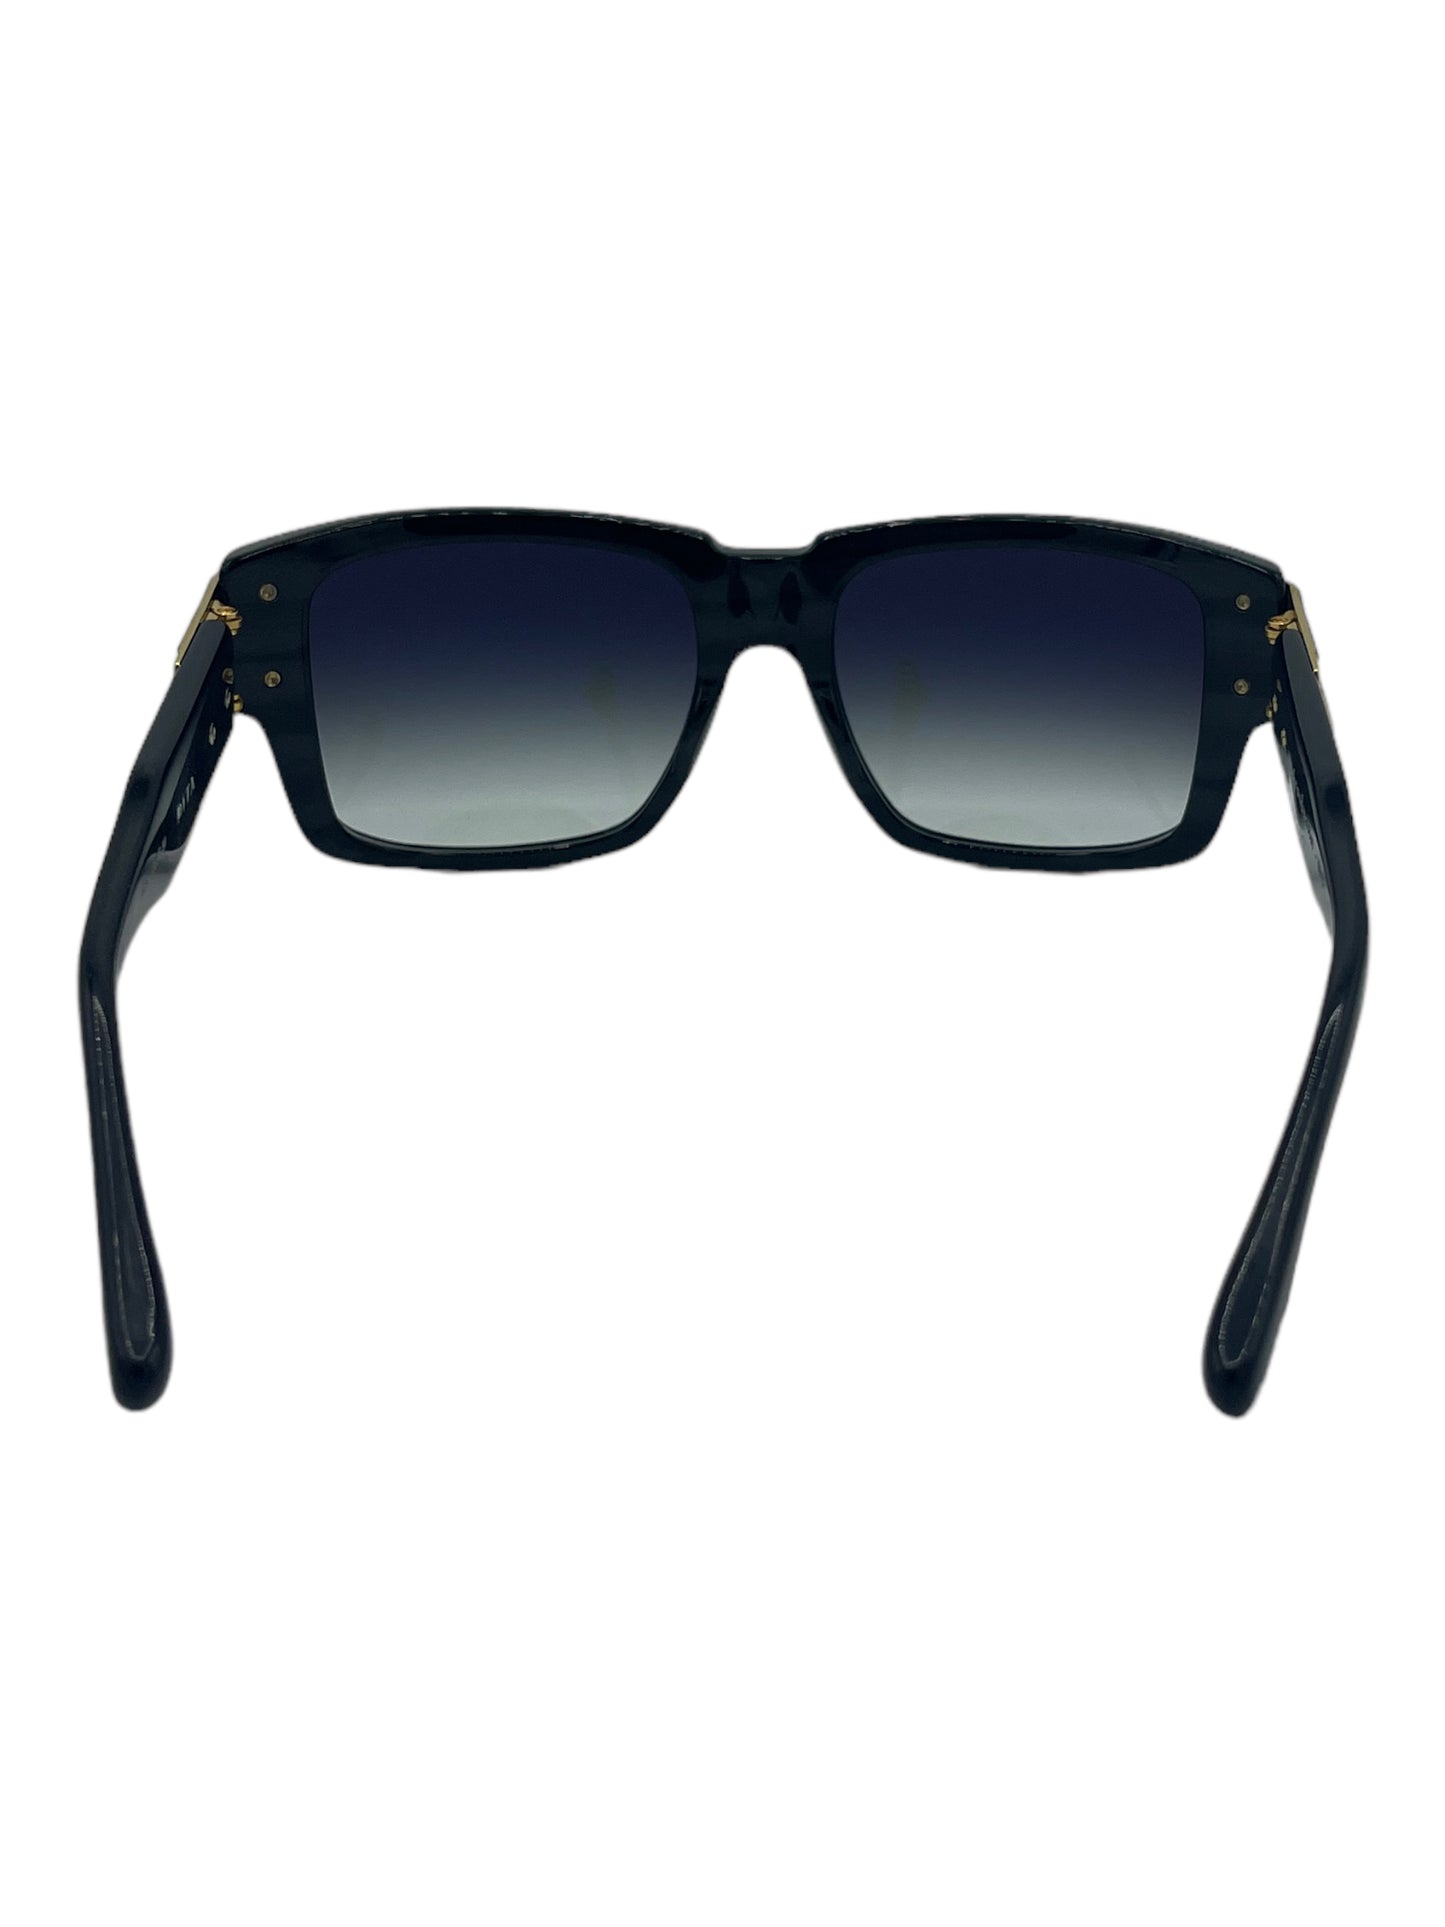 Dita Black And Gold ‘Grandmaster-Two’ Sunglasses